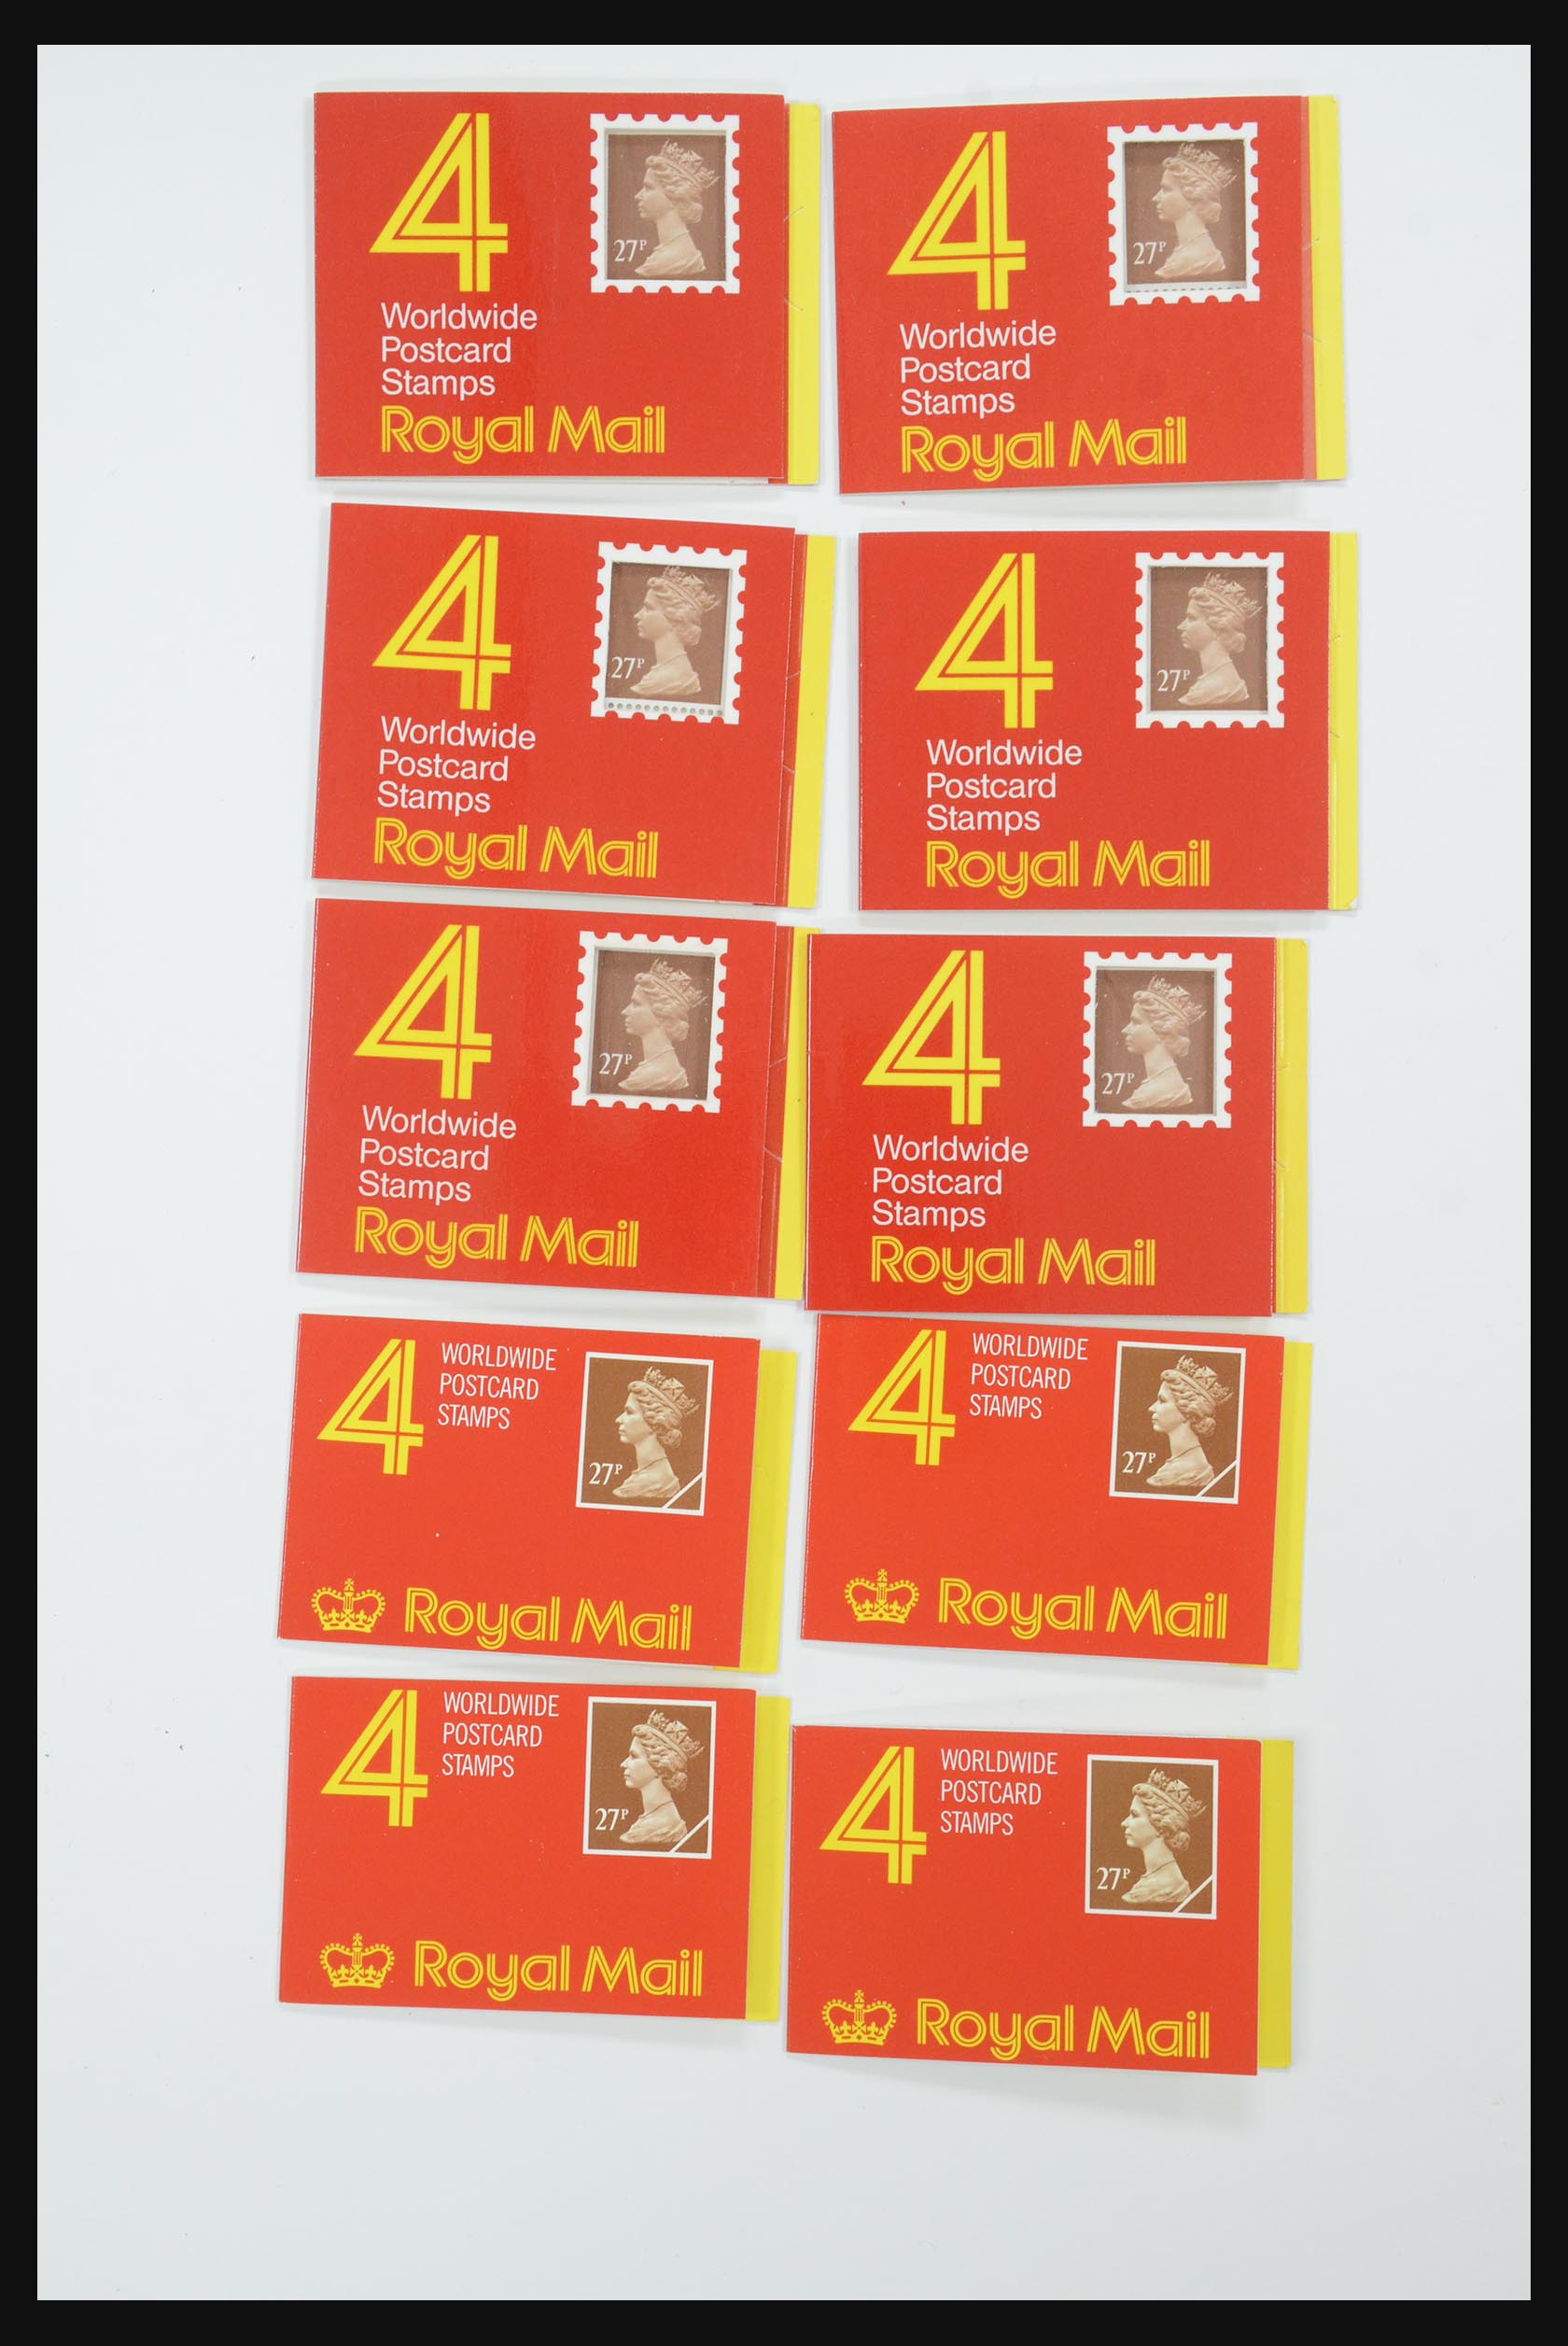 31961 073 - 31961 Great Britain stampbooklets 1971-1999.